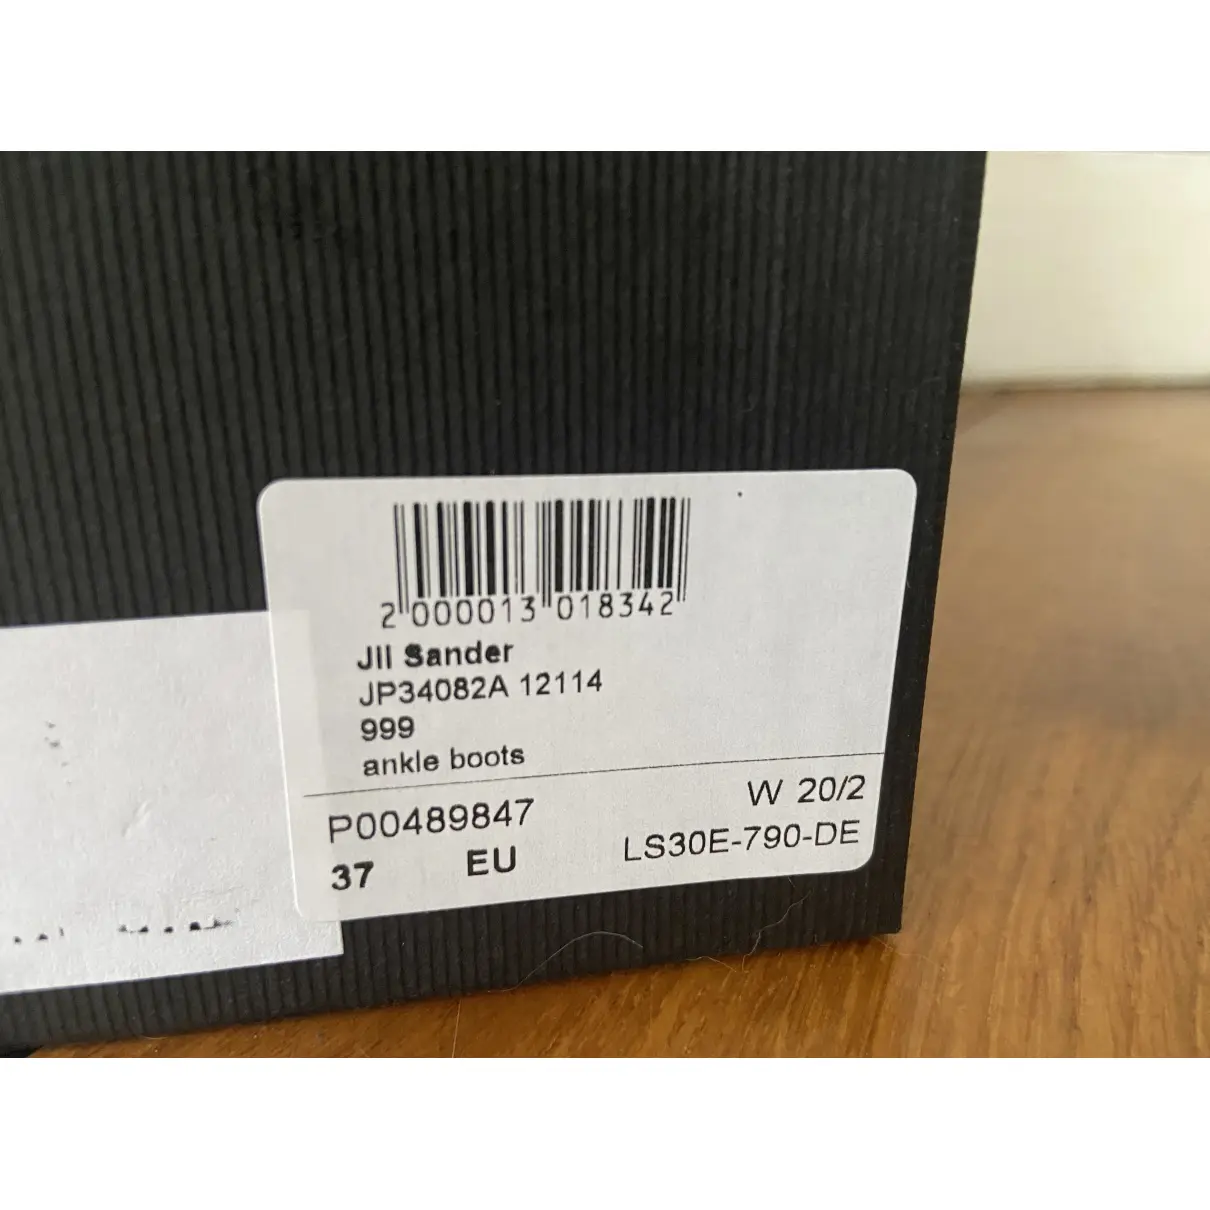 Buy Jil Sander Leather ankle boots online